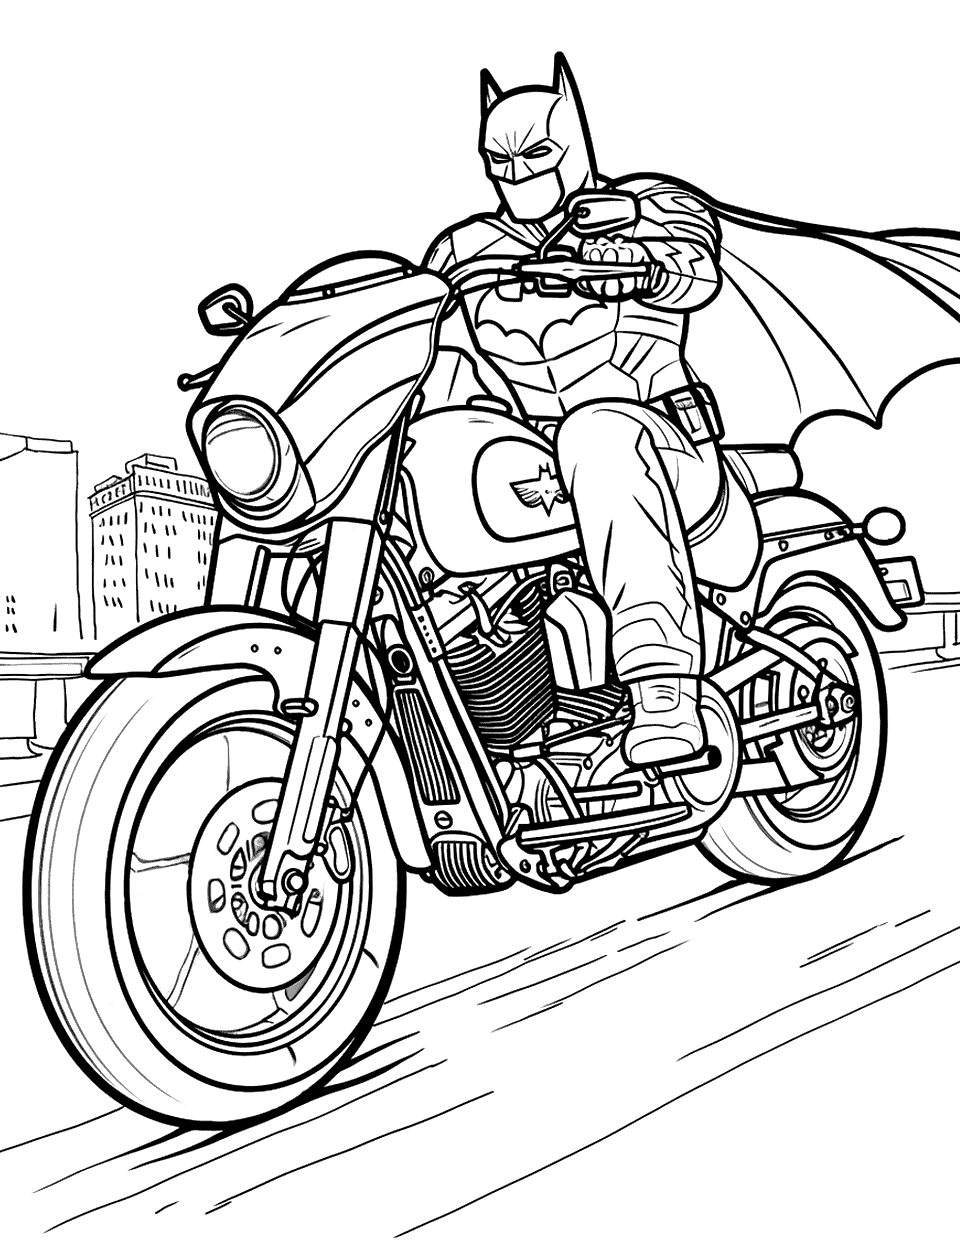 Batman on Motorcycle Coloring Page - Batman riding his motorcycle through Gotham City at night.